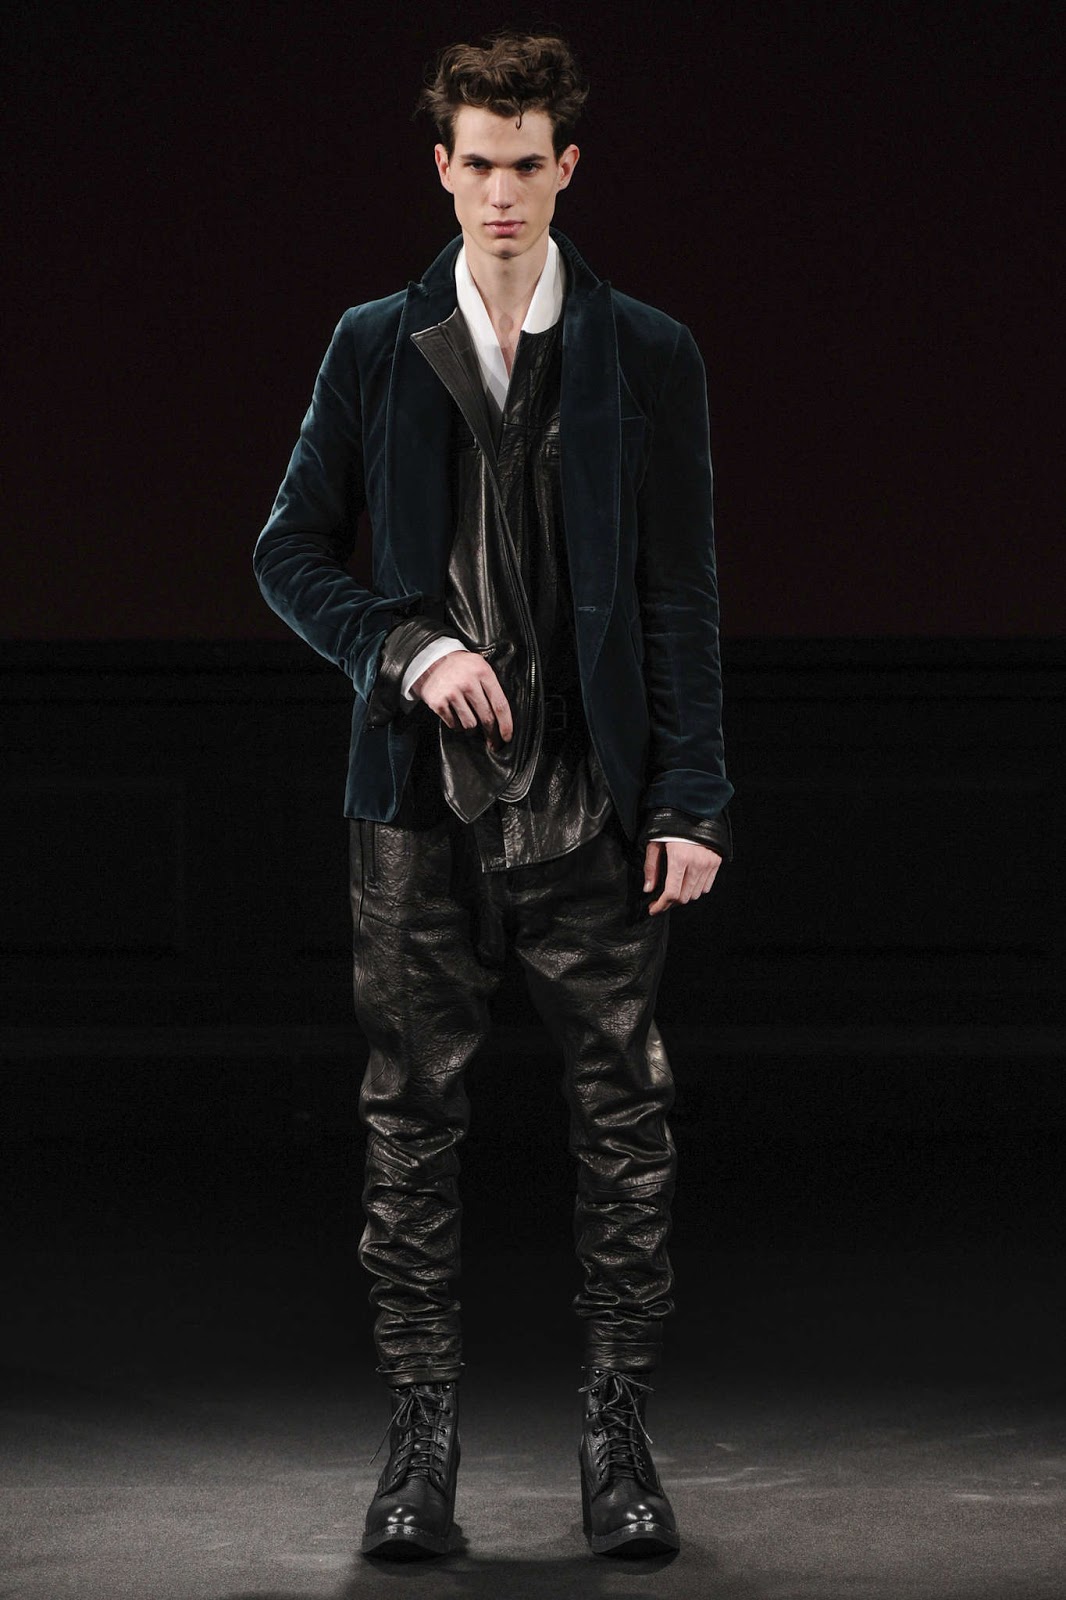 Marc Sebastian Faiella Covers 10 Men in Prada – The Fashionisto